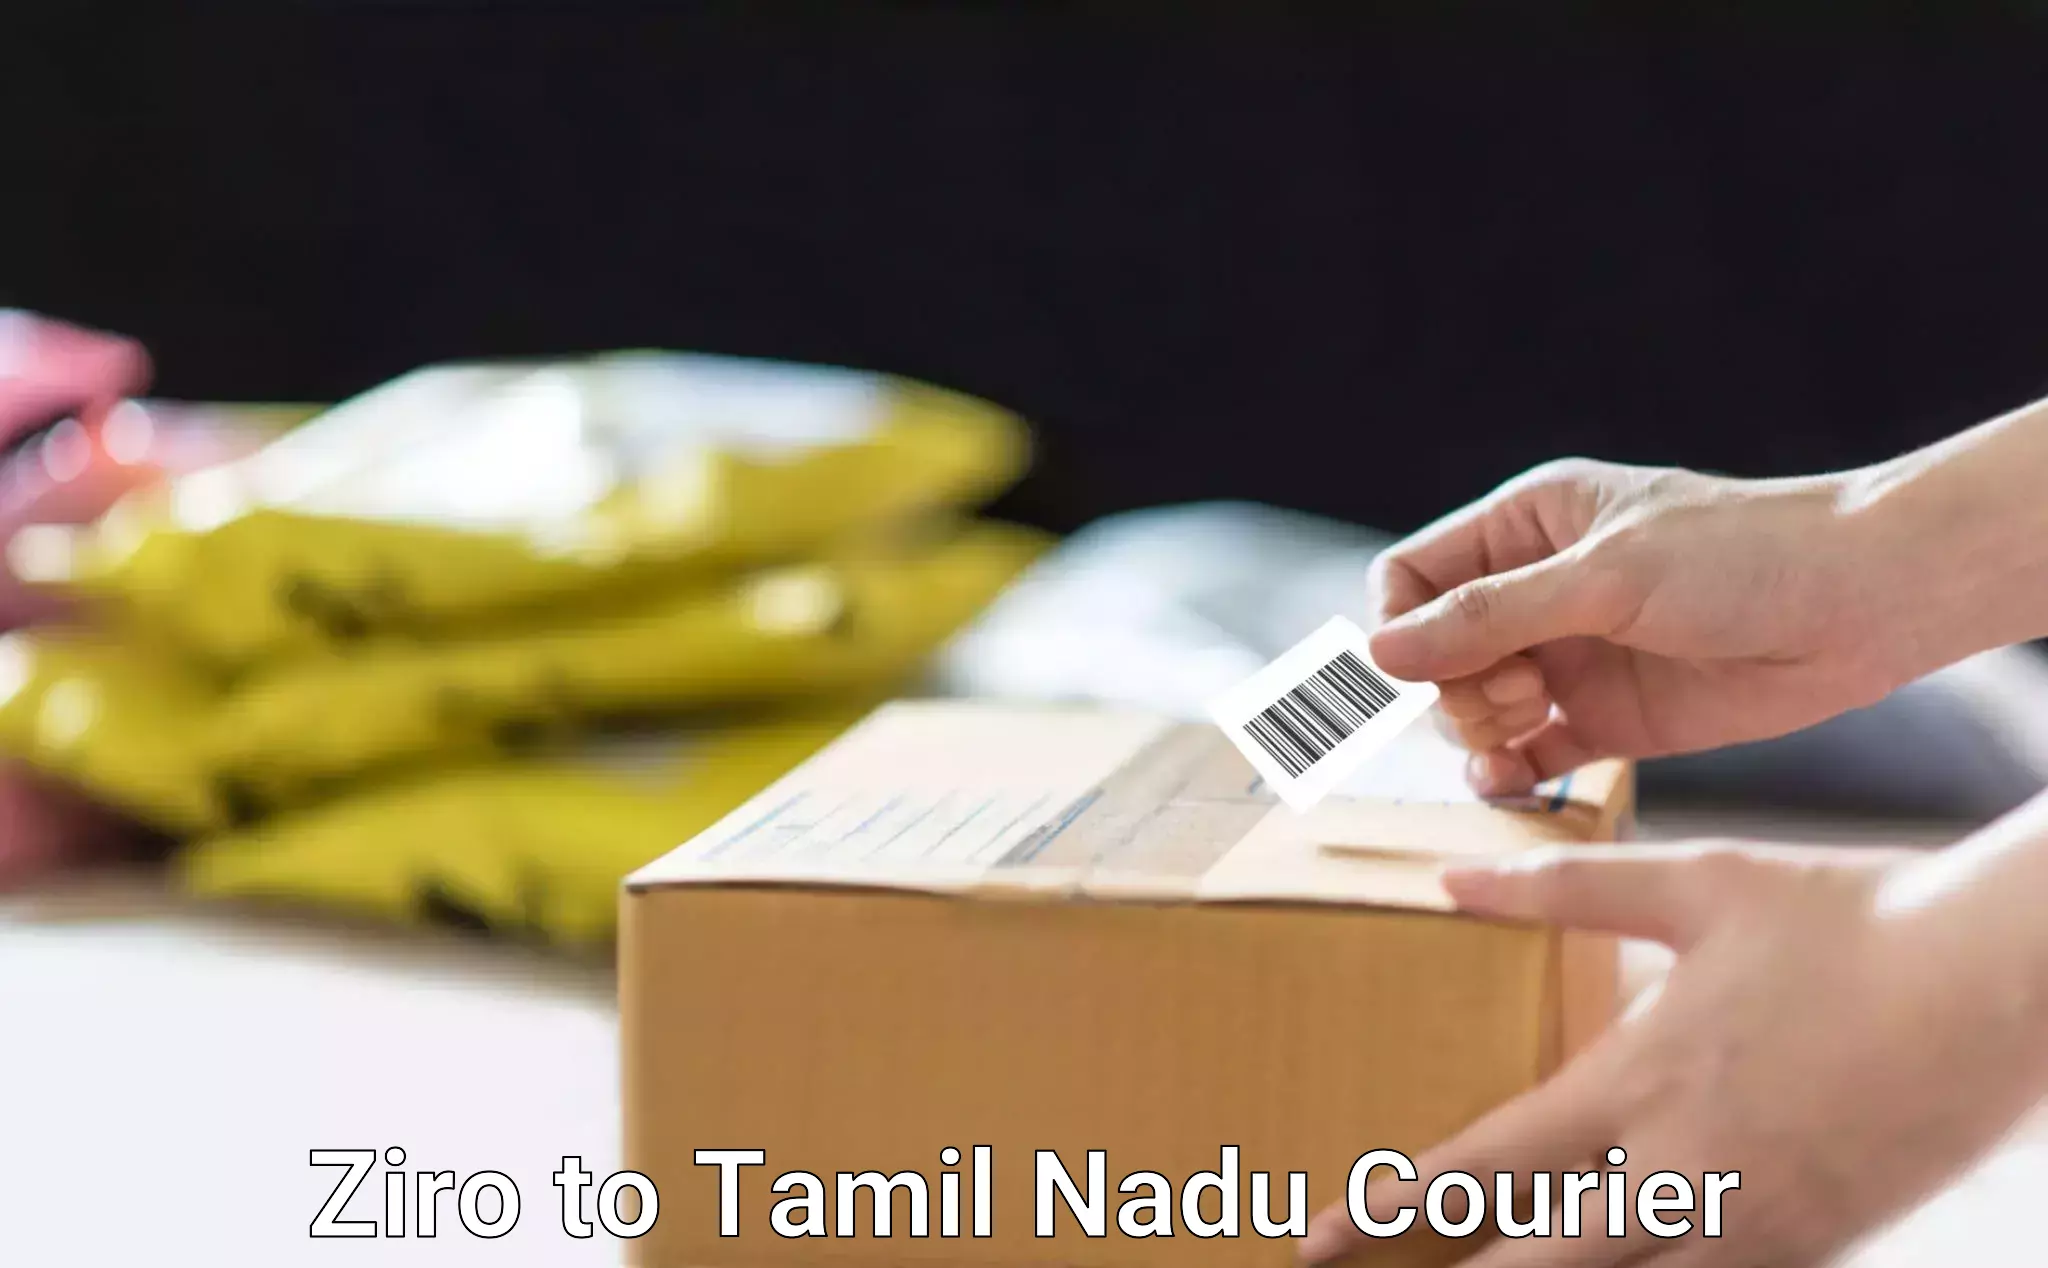 Business shipping needs Ziro to Tamil Nadu